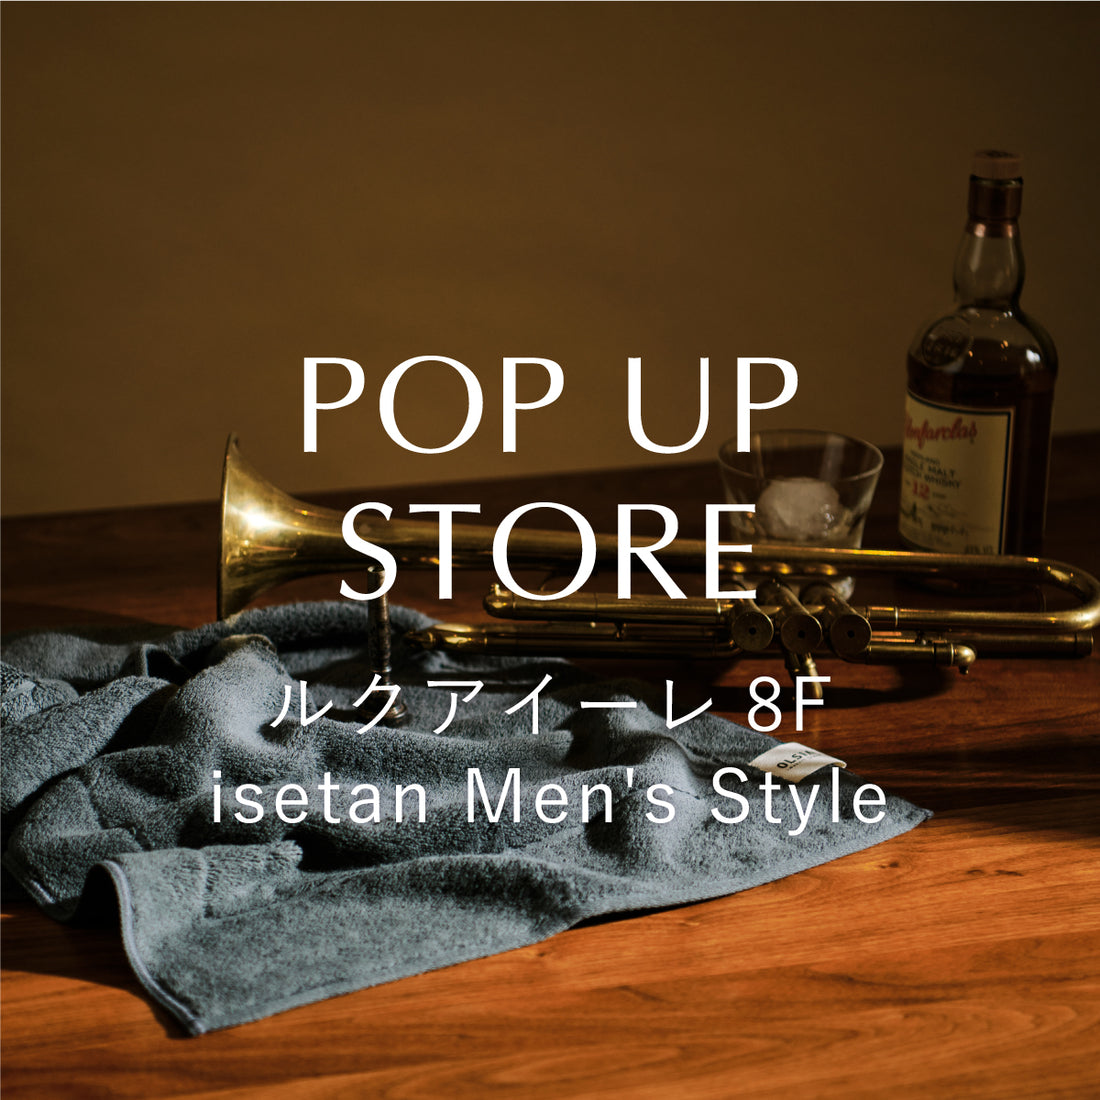 POP UP STORE ルクアイーレ8F isetan Men's Style 8月4日(金)～8月31日(木)